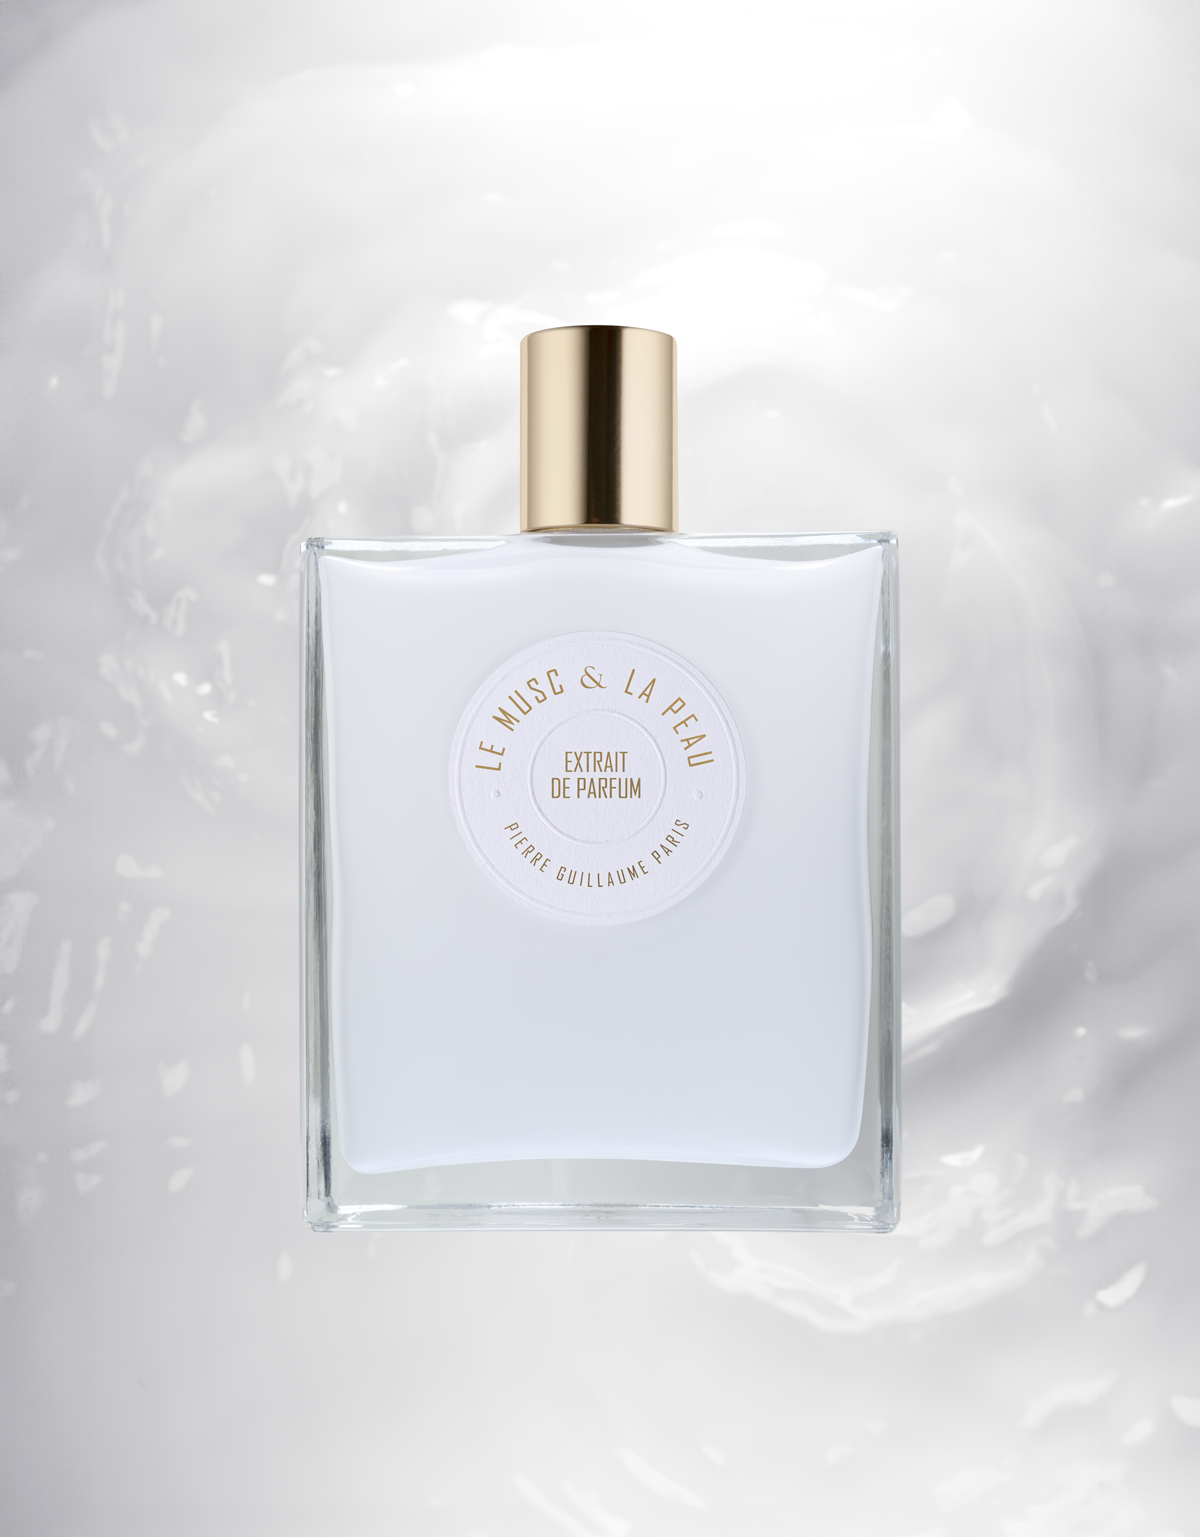 Le Musc & la Peau - Perfume Extract, 100ml Bottle - Rosemary Milk, Ylang-Ylang, Musc Hypralone®, Amber, Cedar, Sandalwood. Artwork.